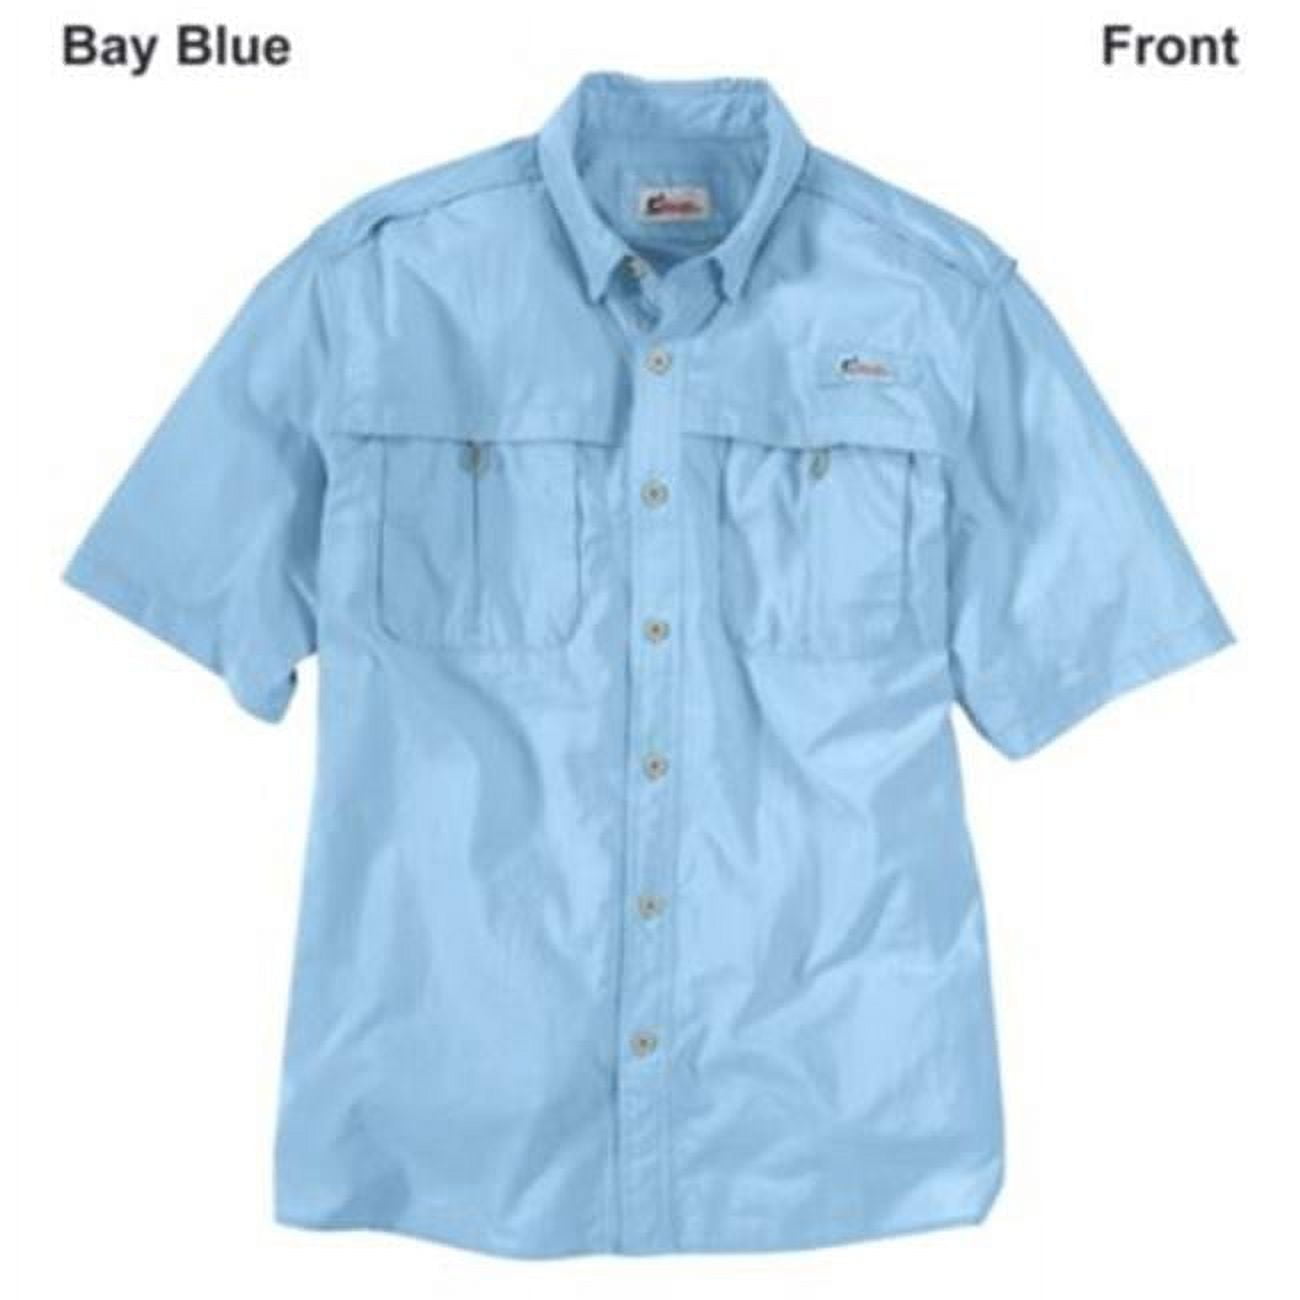 World Wide Sportsman 76047202 Dorado Pass Shirts for Men - Short Sleeve -  Bay Blue - M